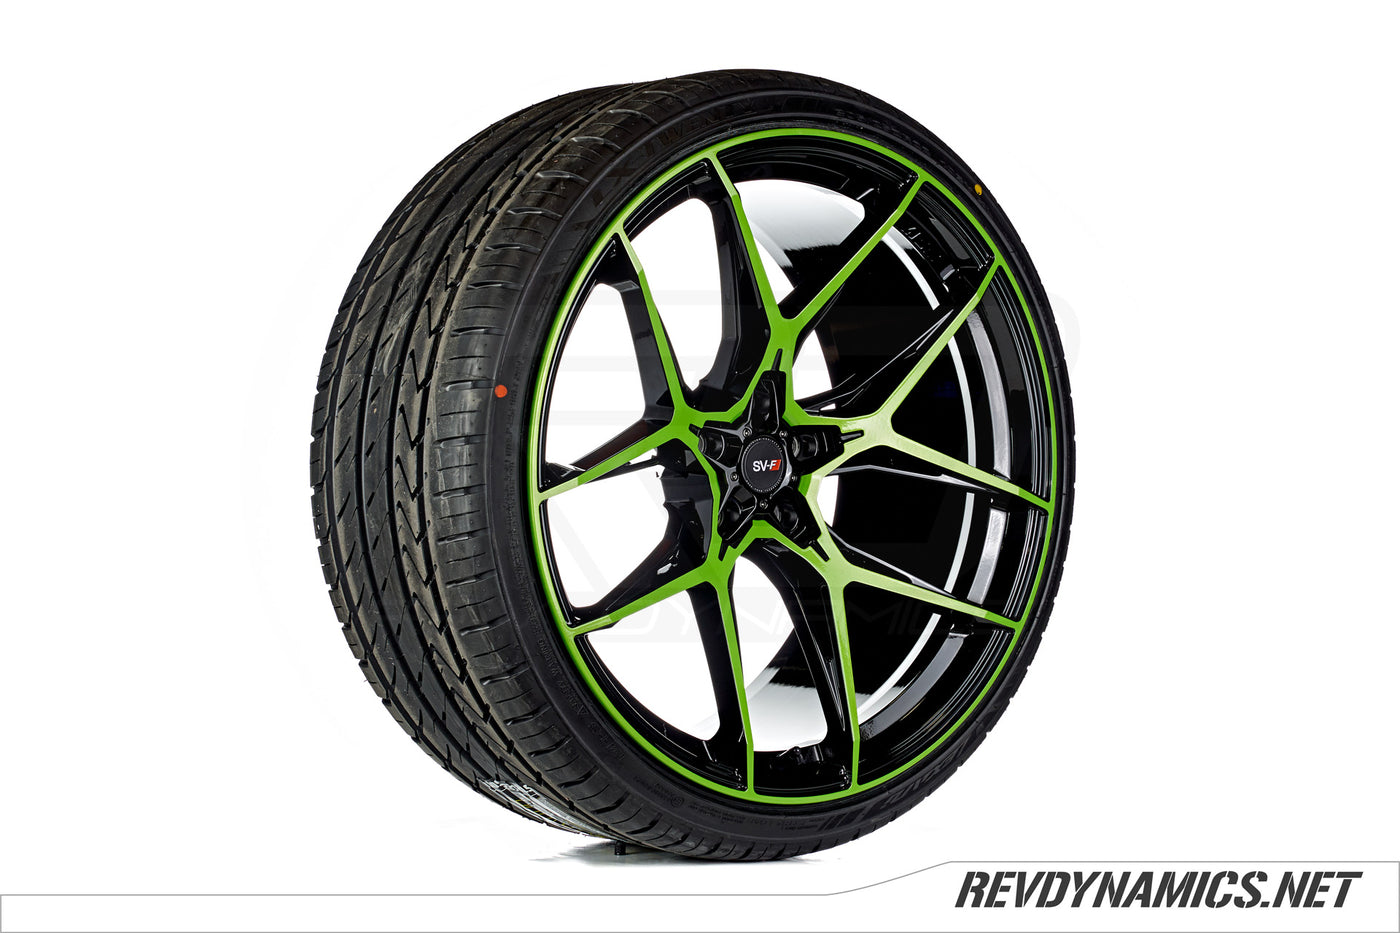 Savini SV-F5 22" Rim Powdercoated Envy Green and Black Polaris Slingshot colors 